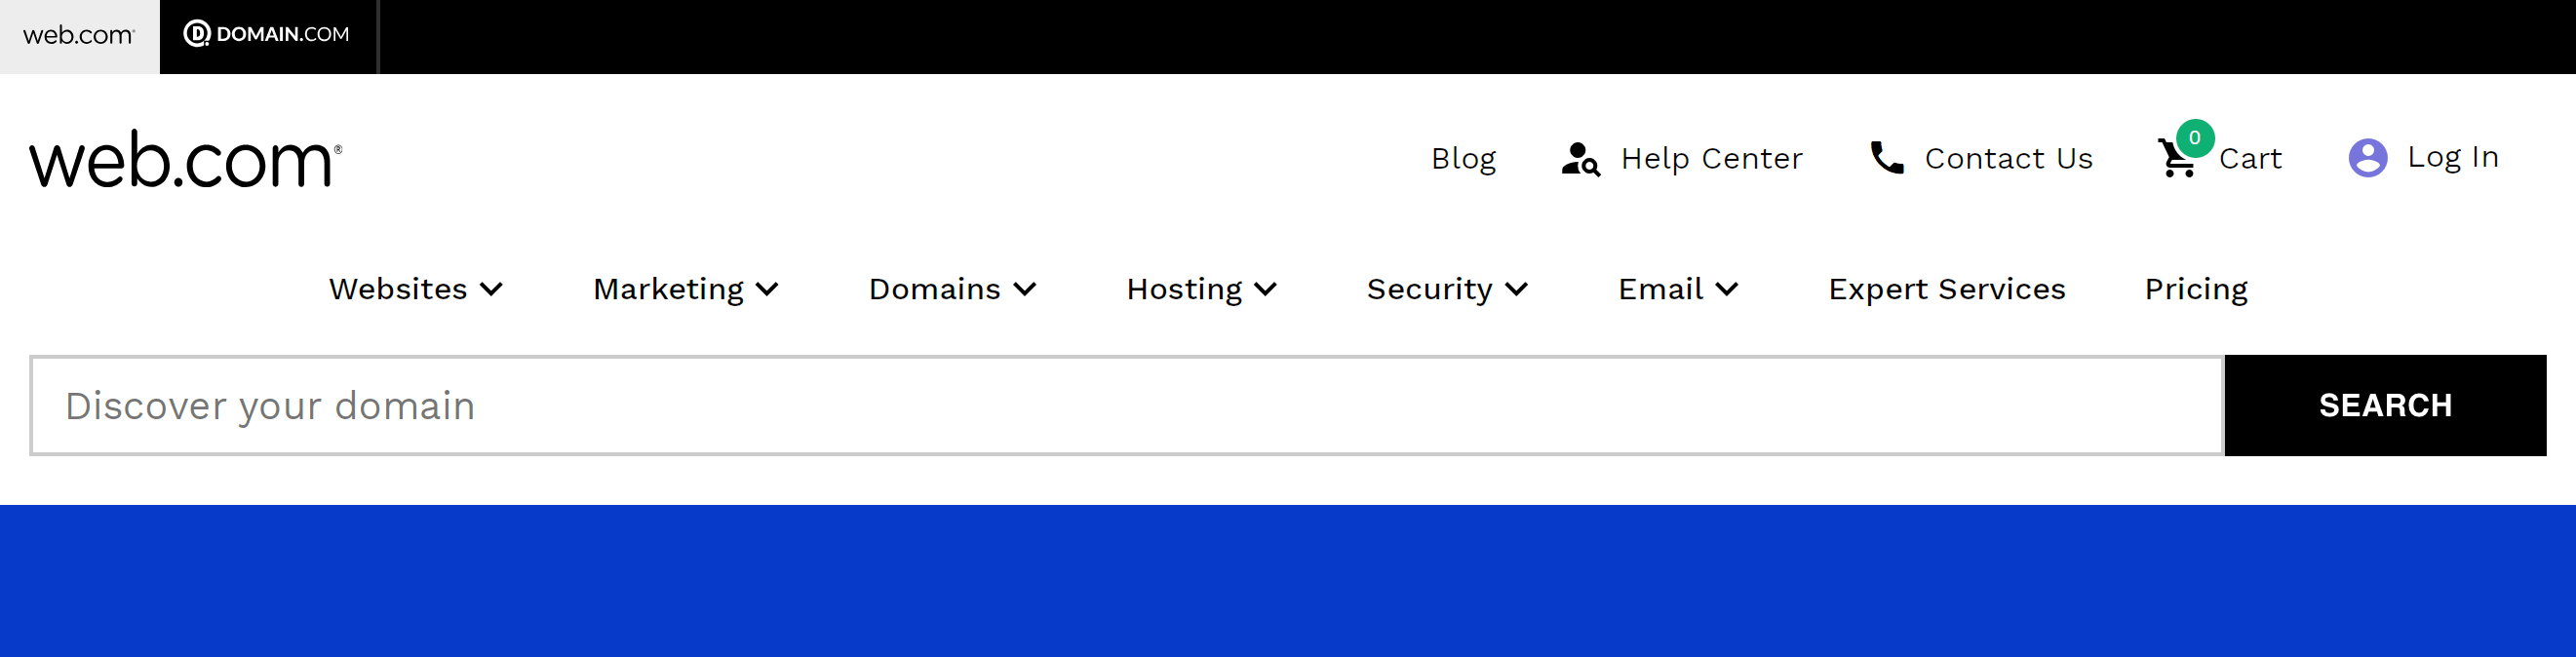 Homepage for Web.com